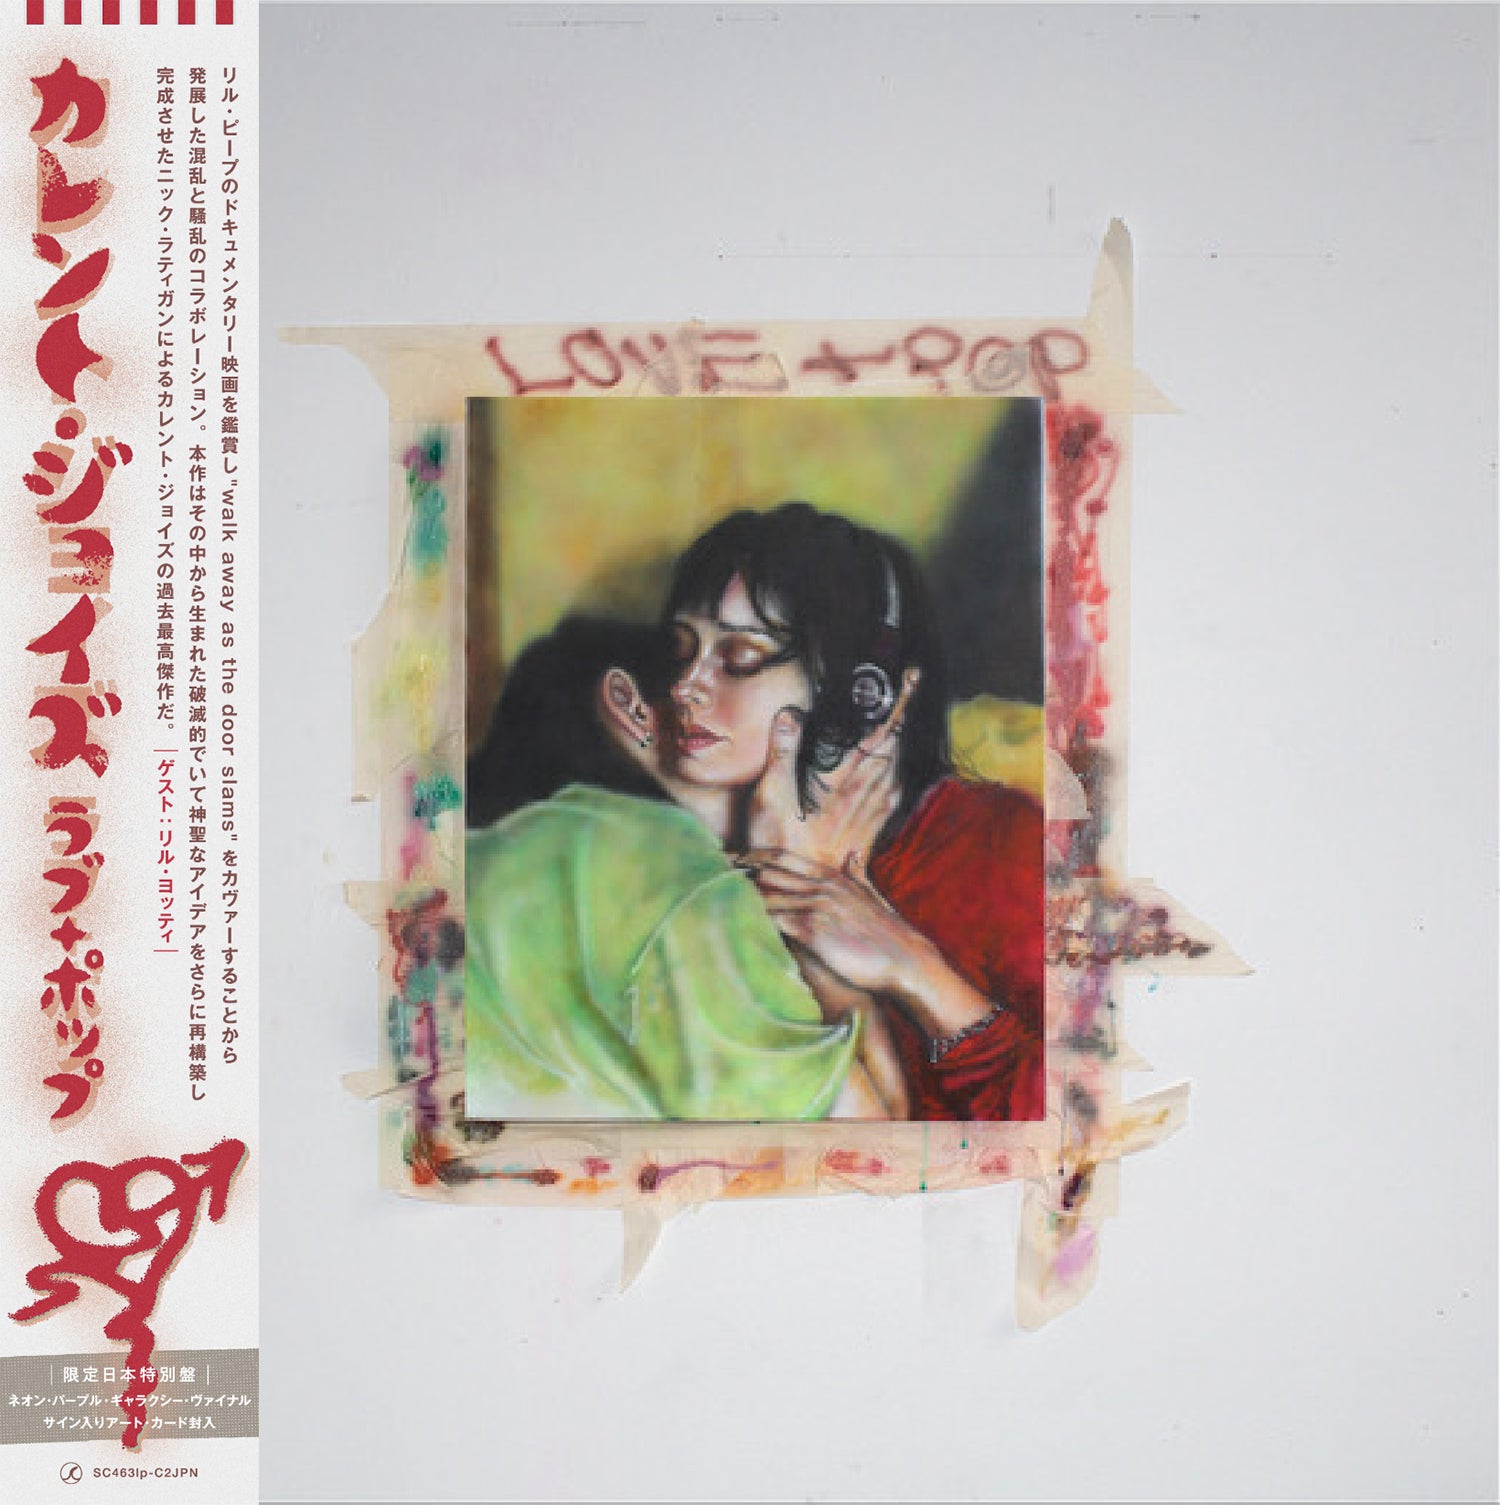 CURRENT JOYS 'LOVE+POP -LTD.JAPAN EDITION-